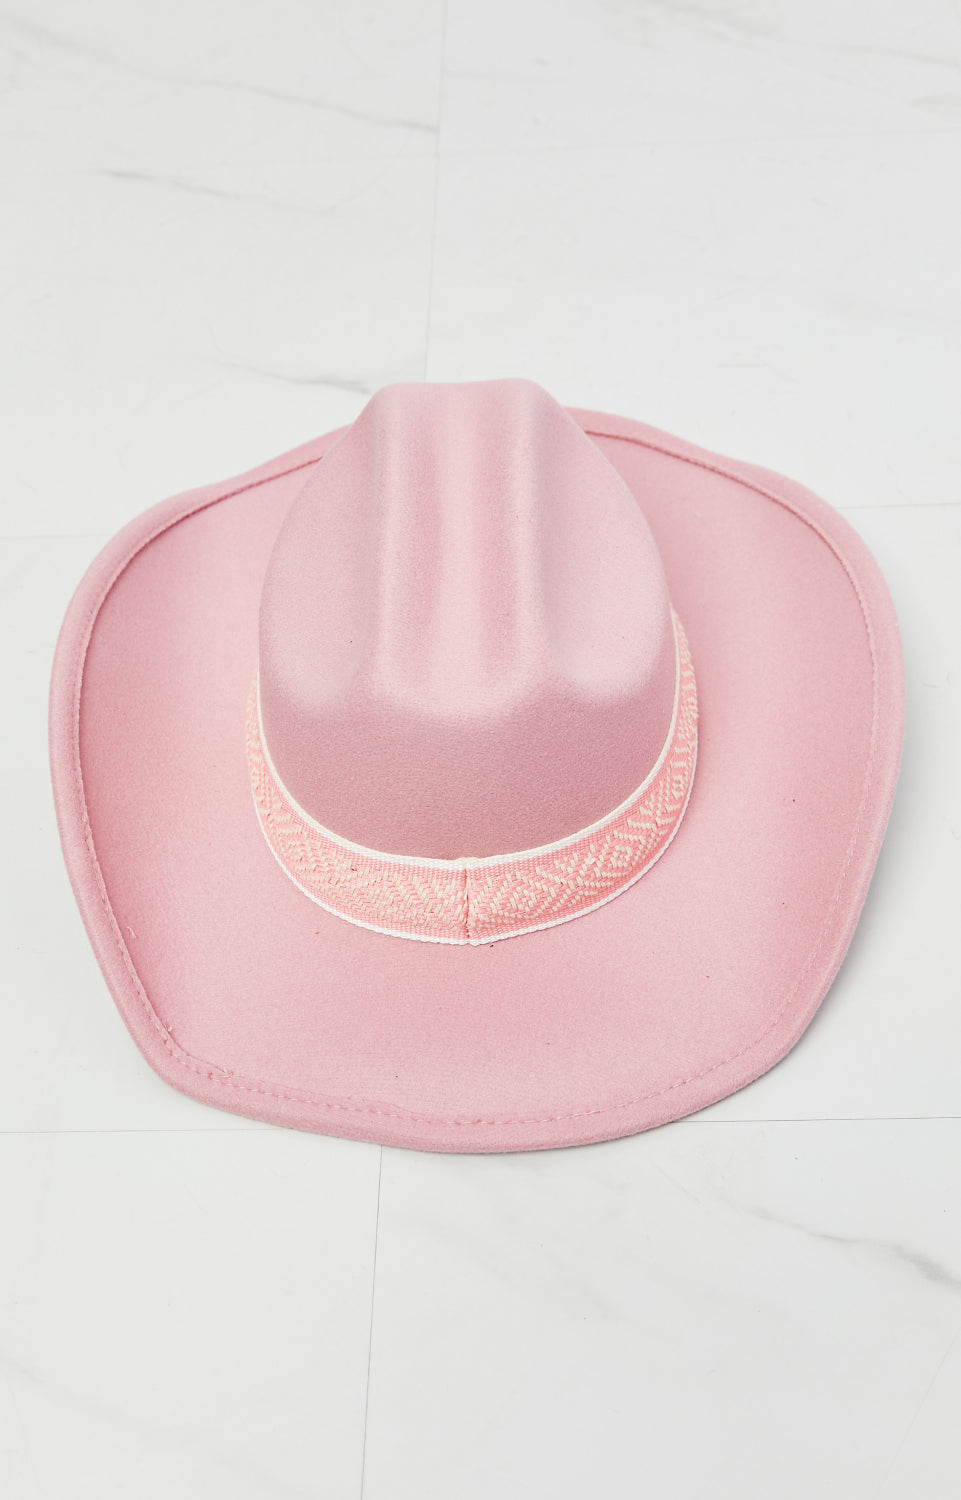 Fame Western Cutie Cowboy Hat in Pink Fame